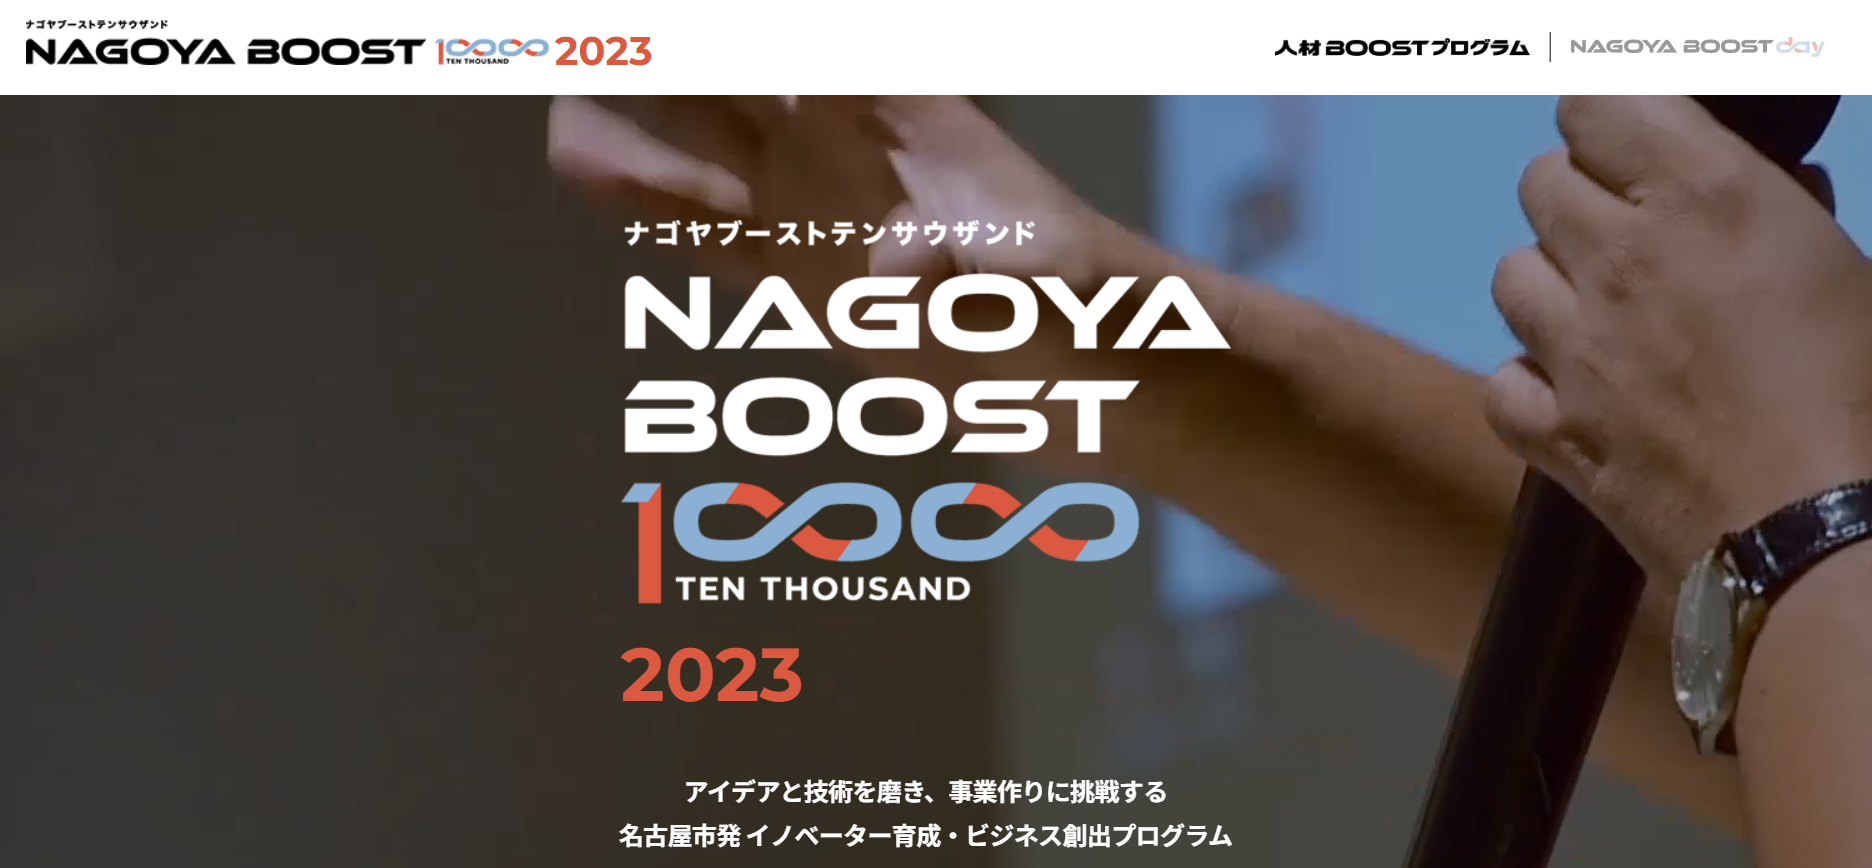 nagoya boost 2023